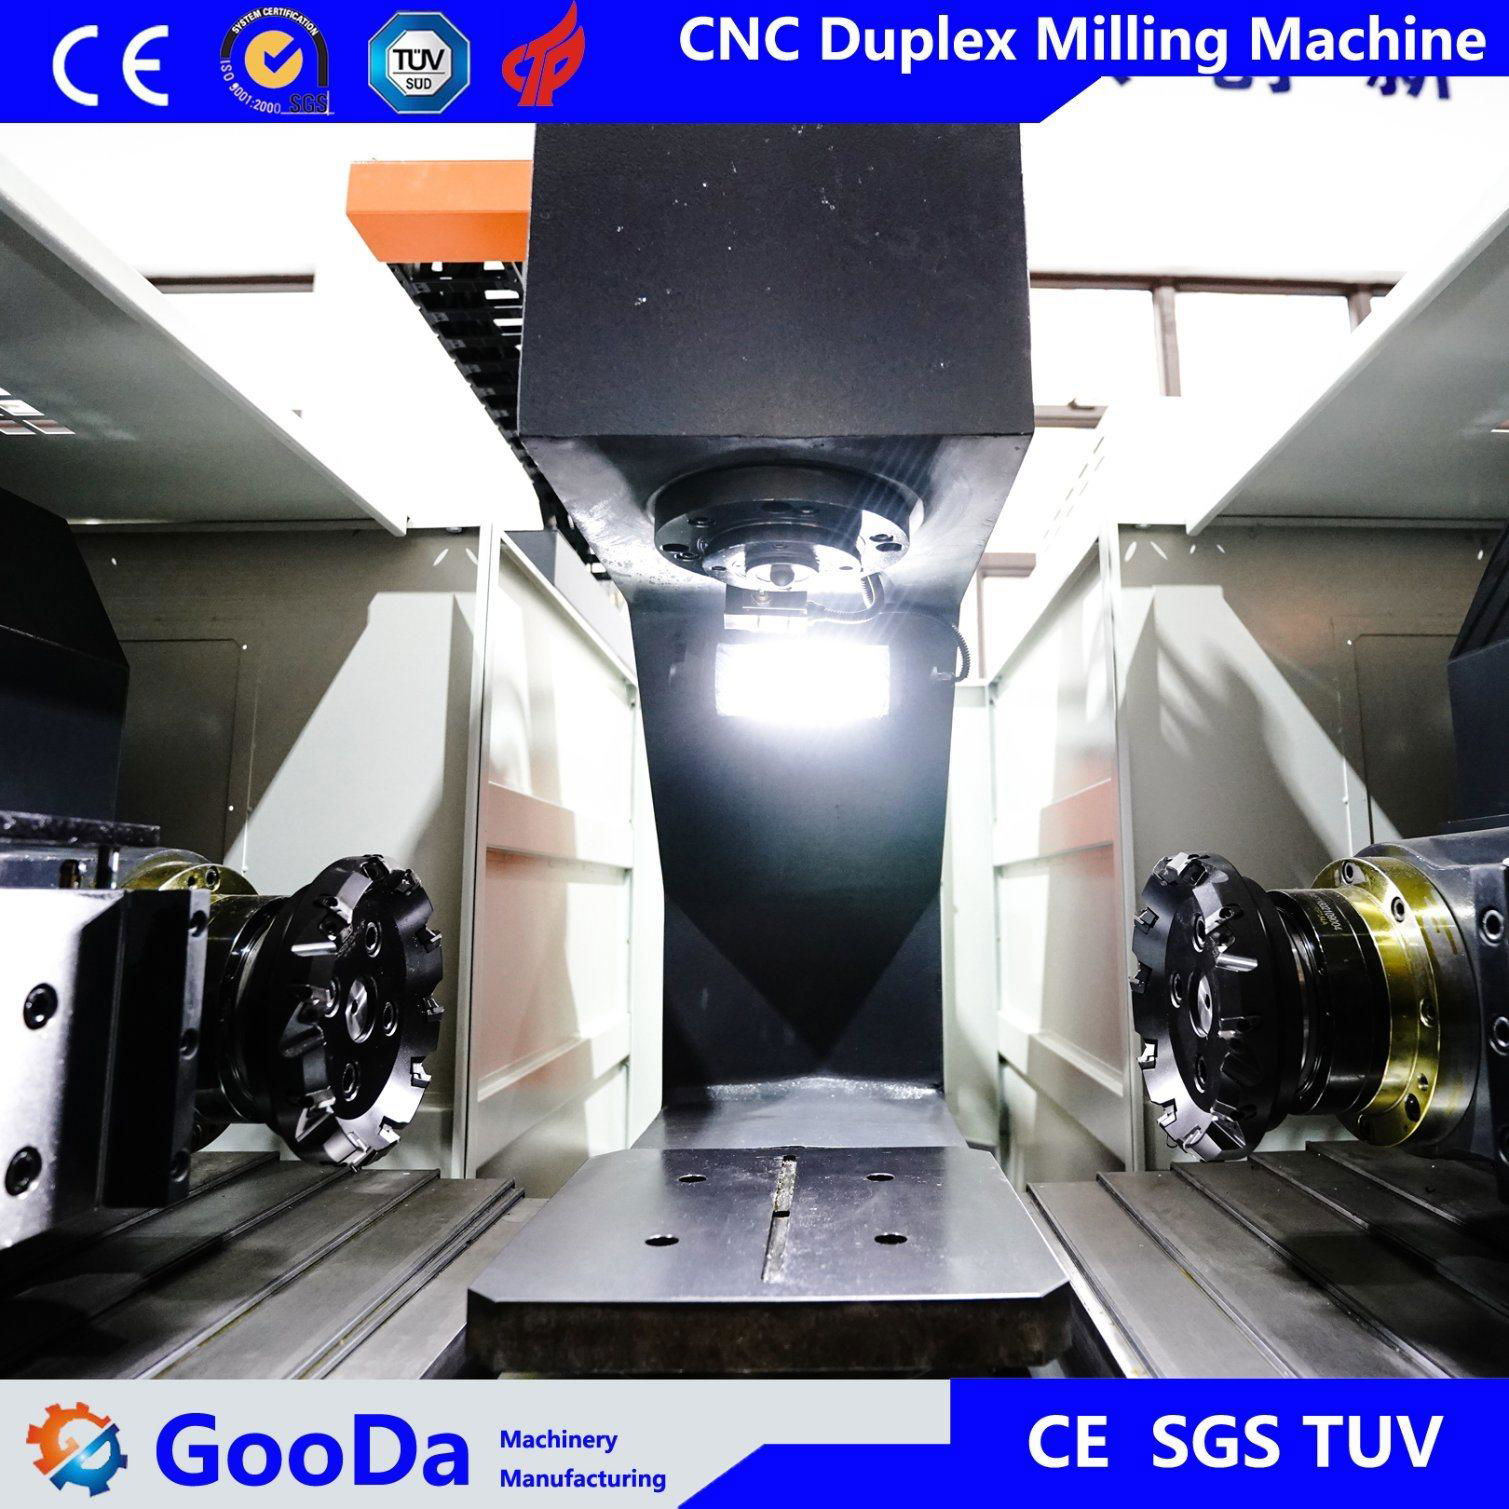 Powerful Twin Head CNC Duplex Milling Machine Precision Full Automatica Cutting  3